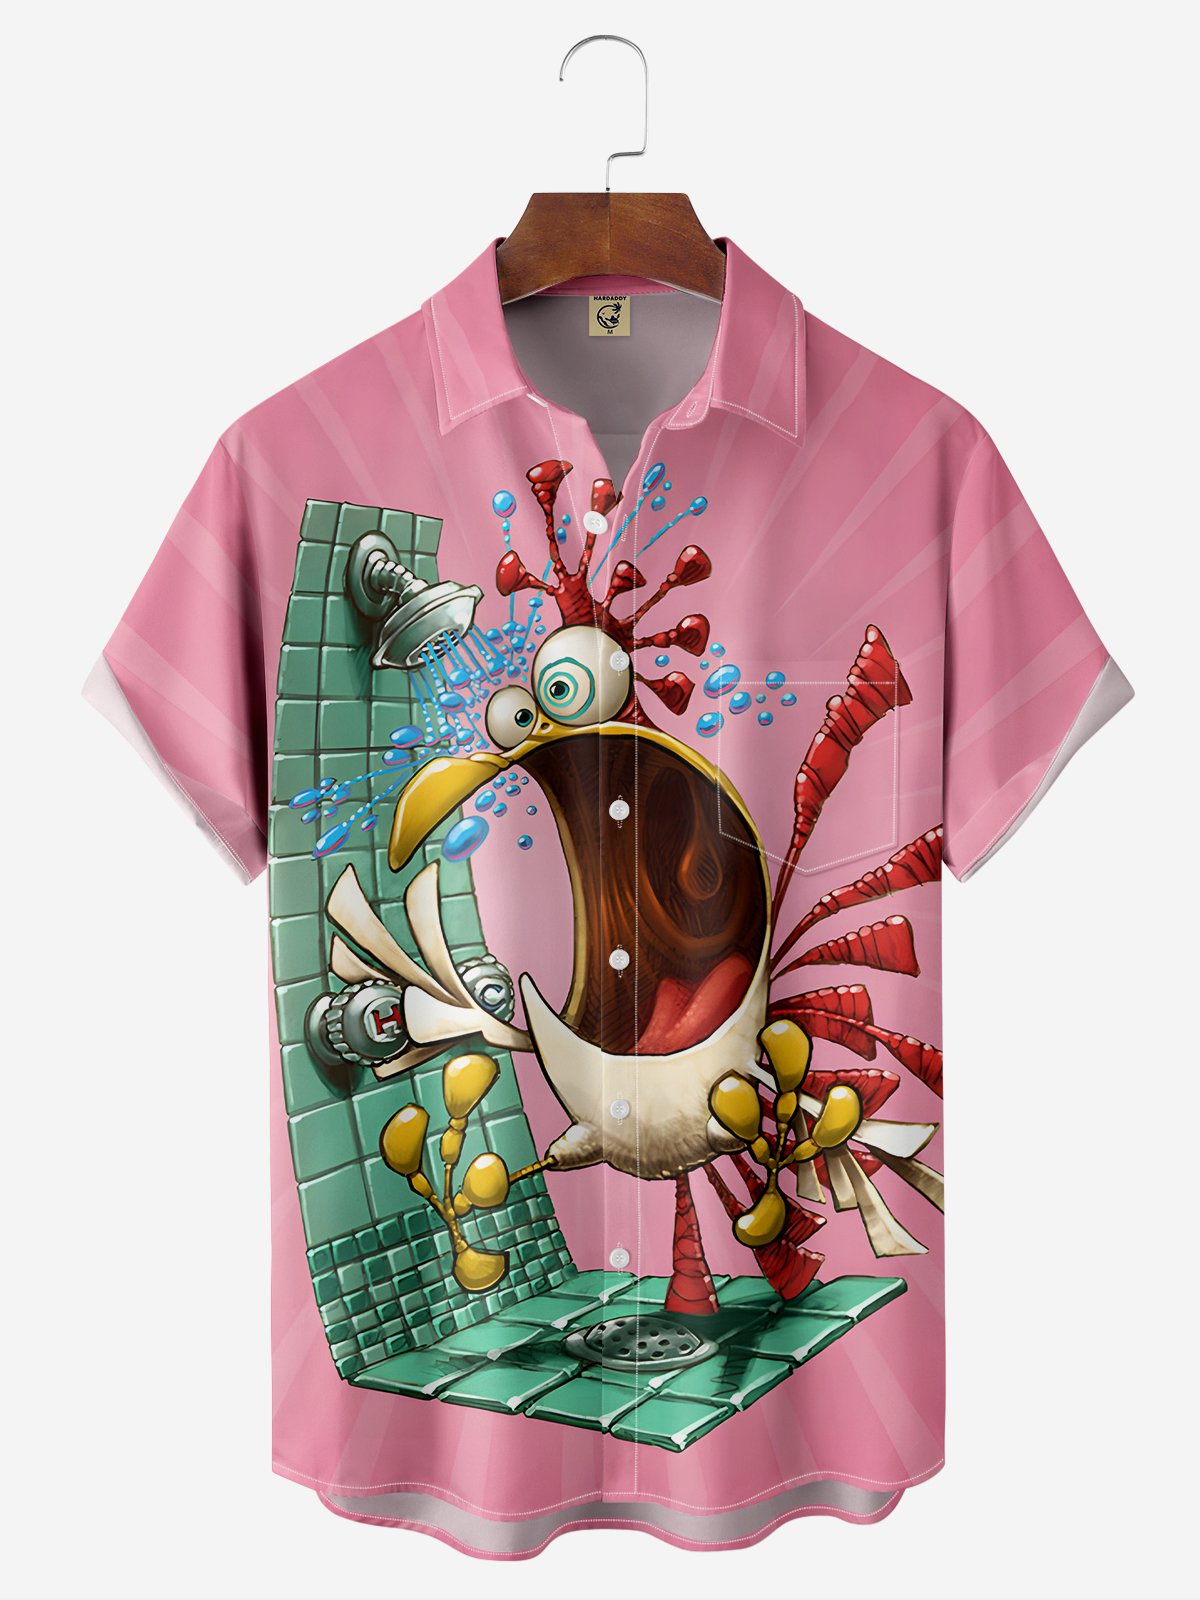 Hardaddy Hot Water Screaming Chicken Shirt